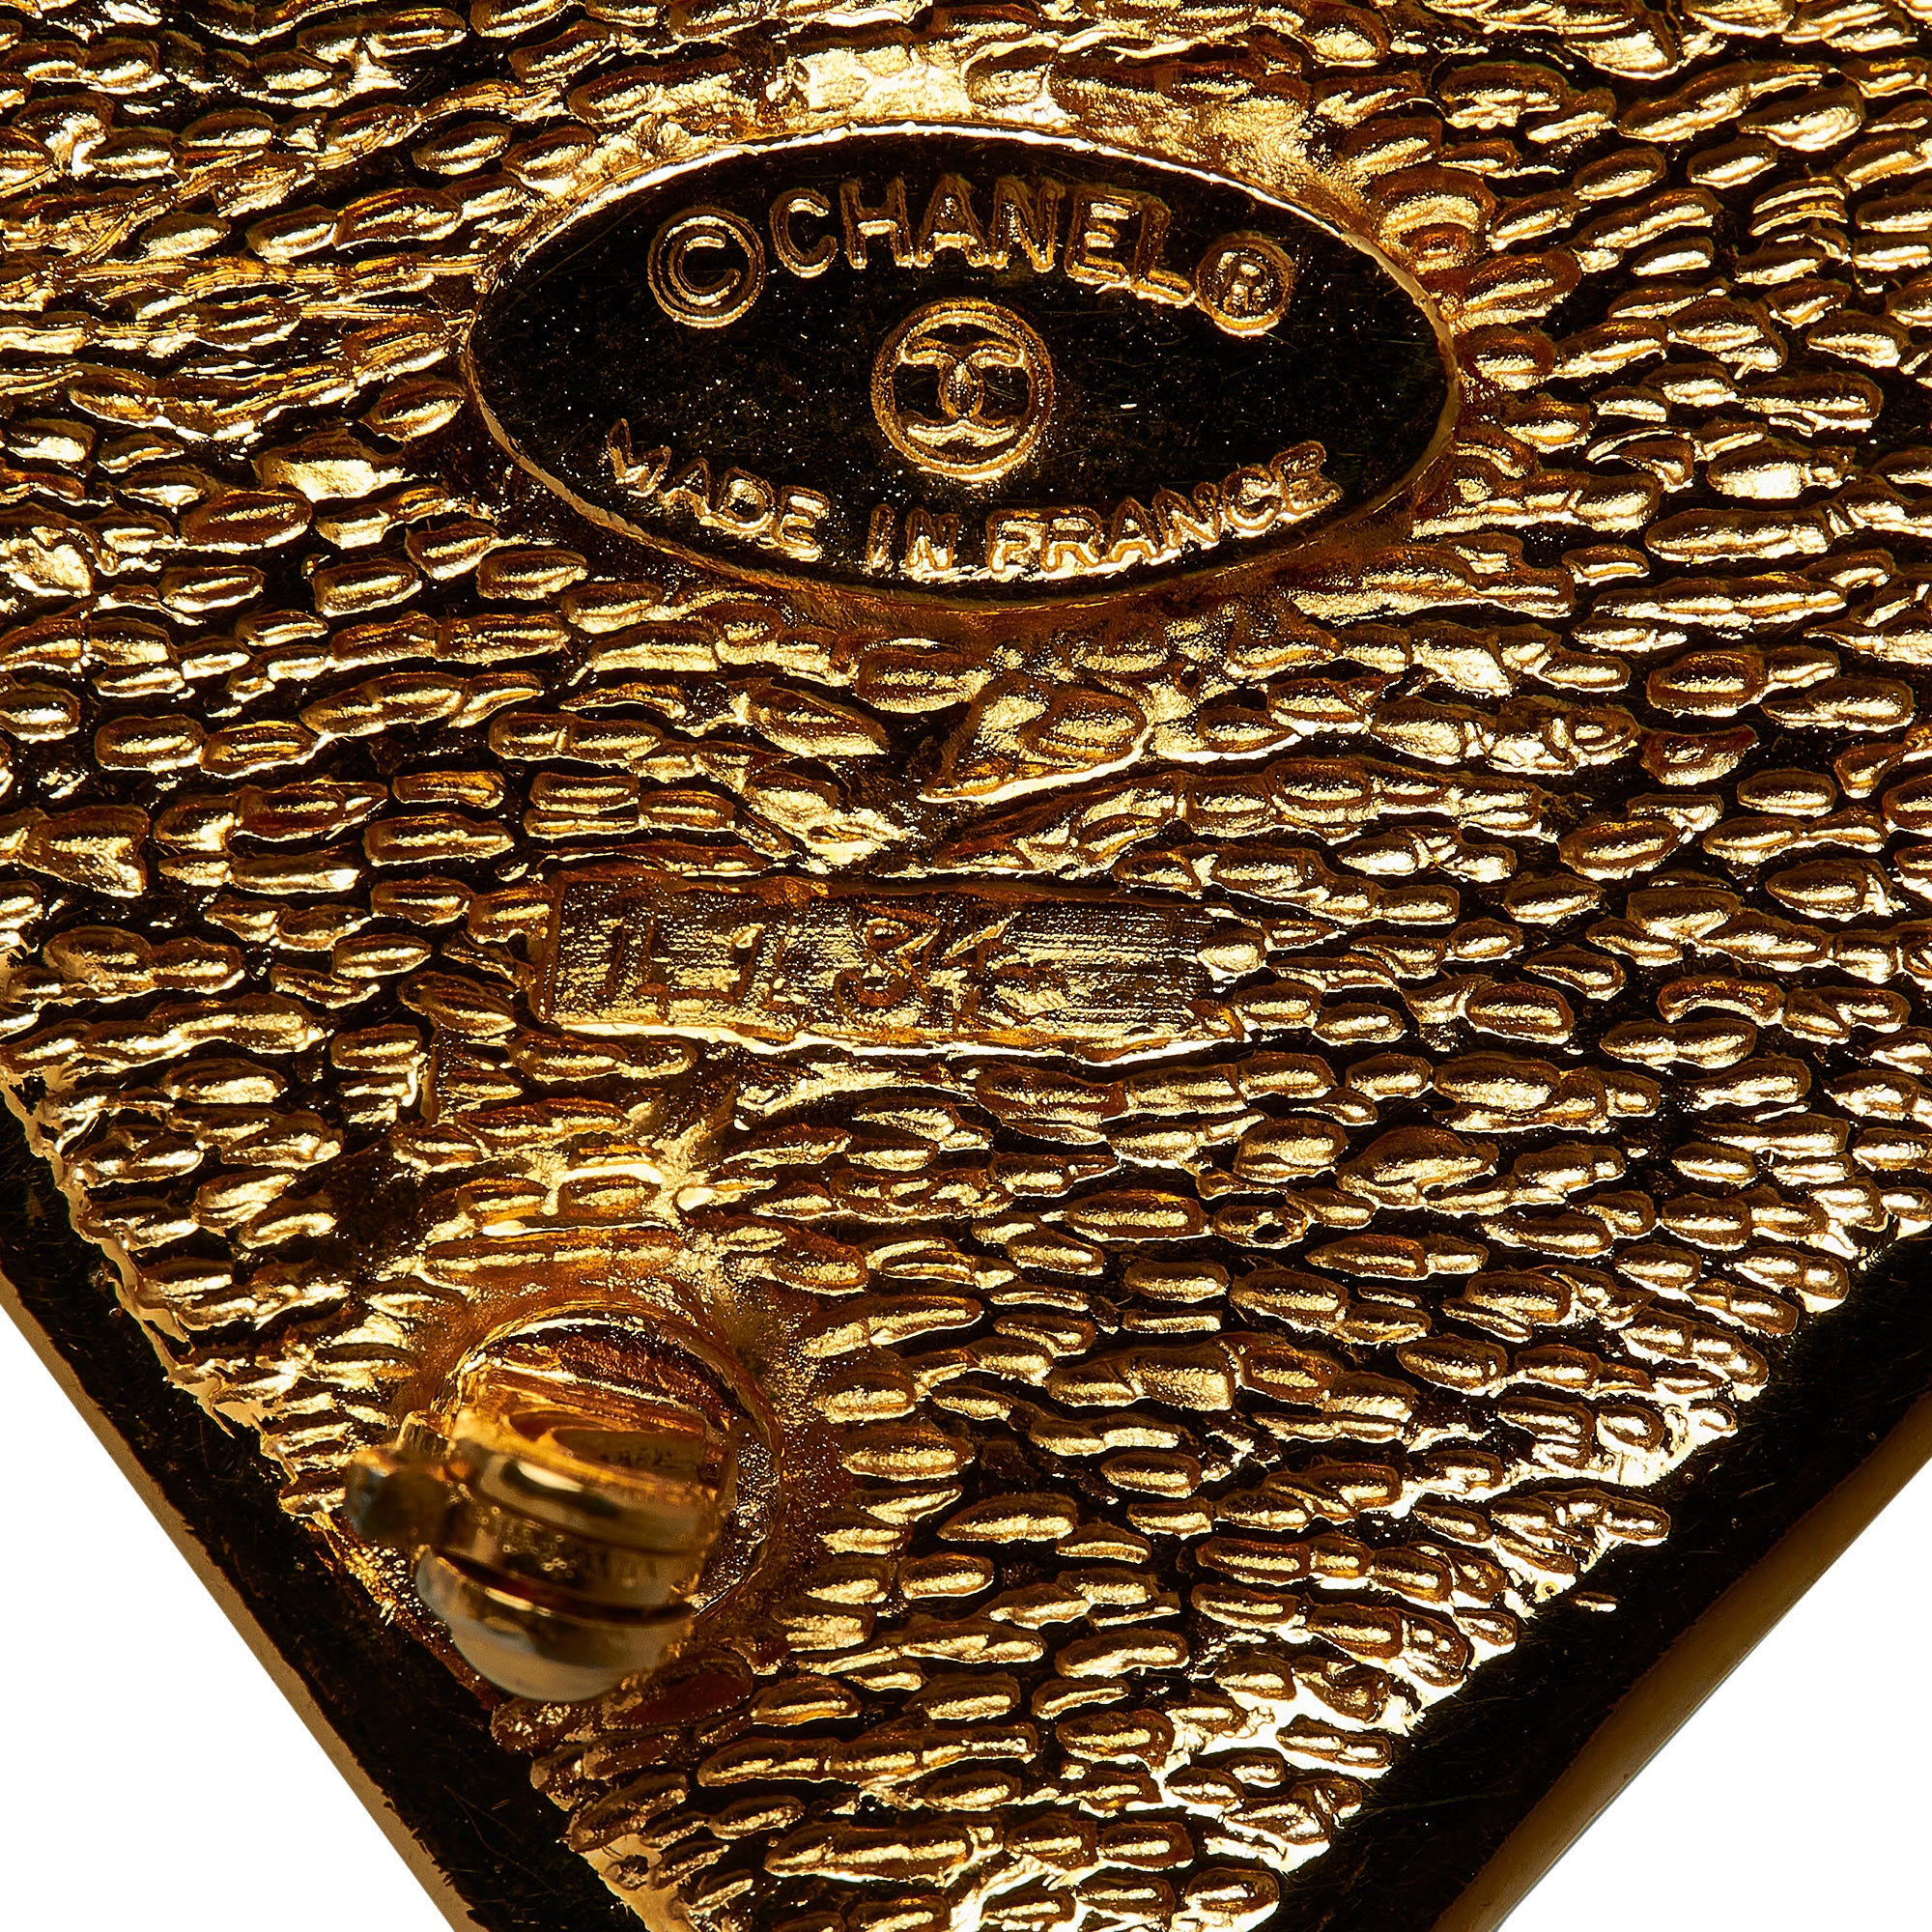 Gold Chanel CC Rhinestone Brooch – Designer Revival